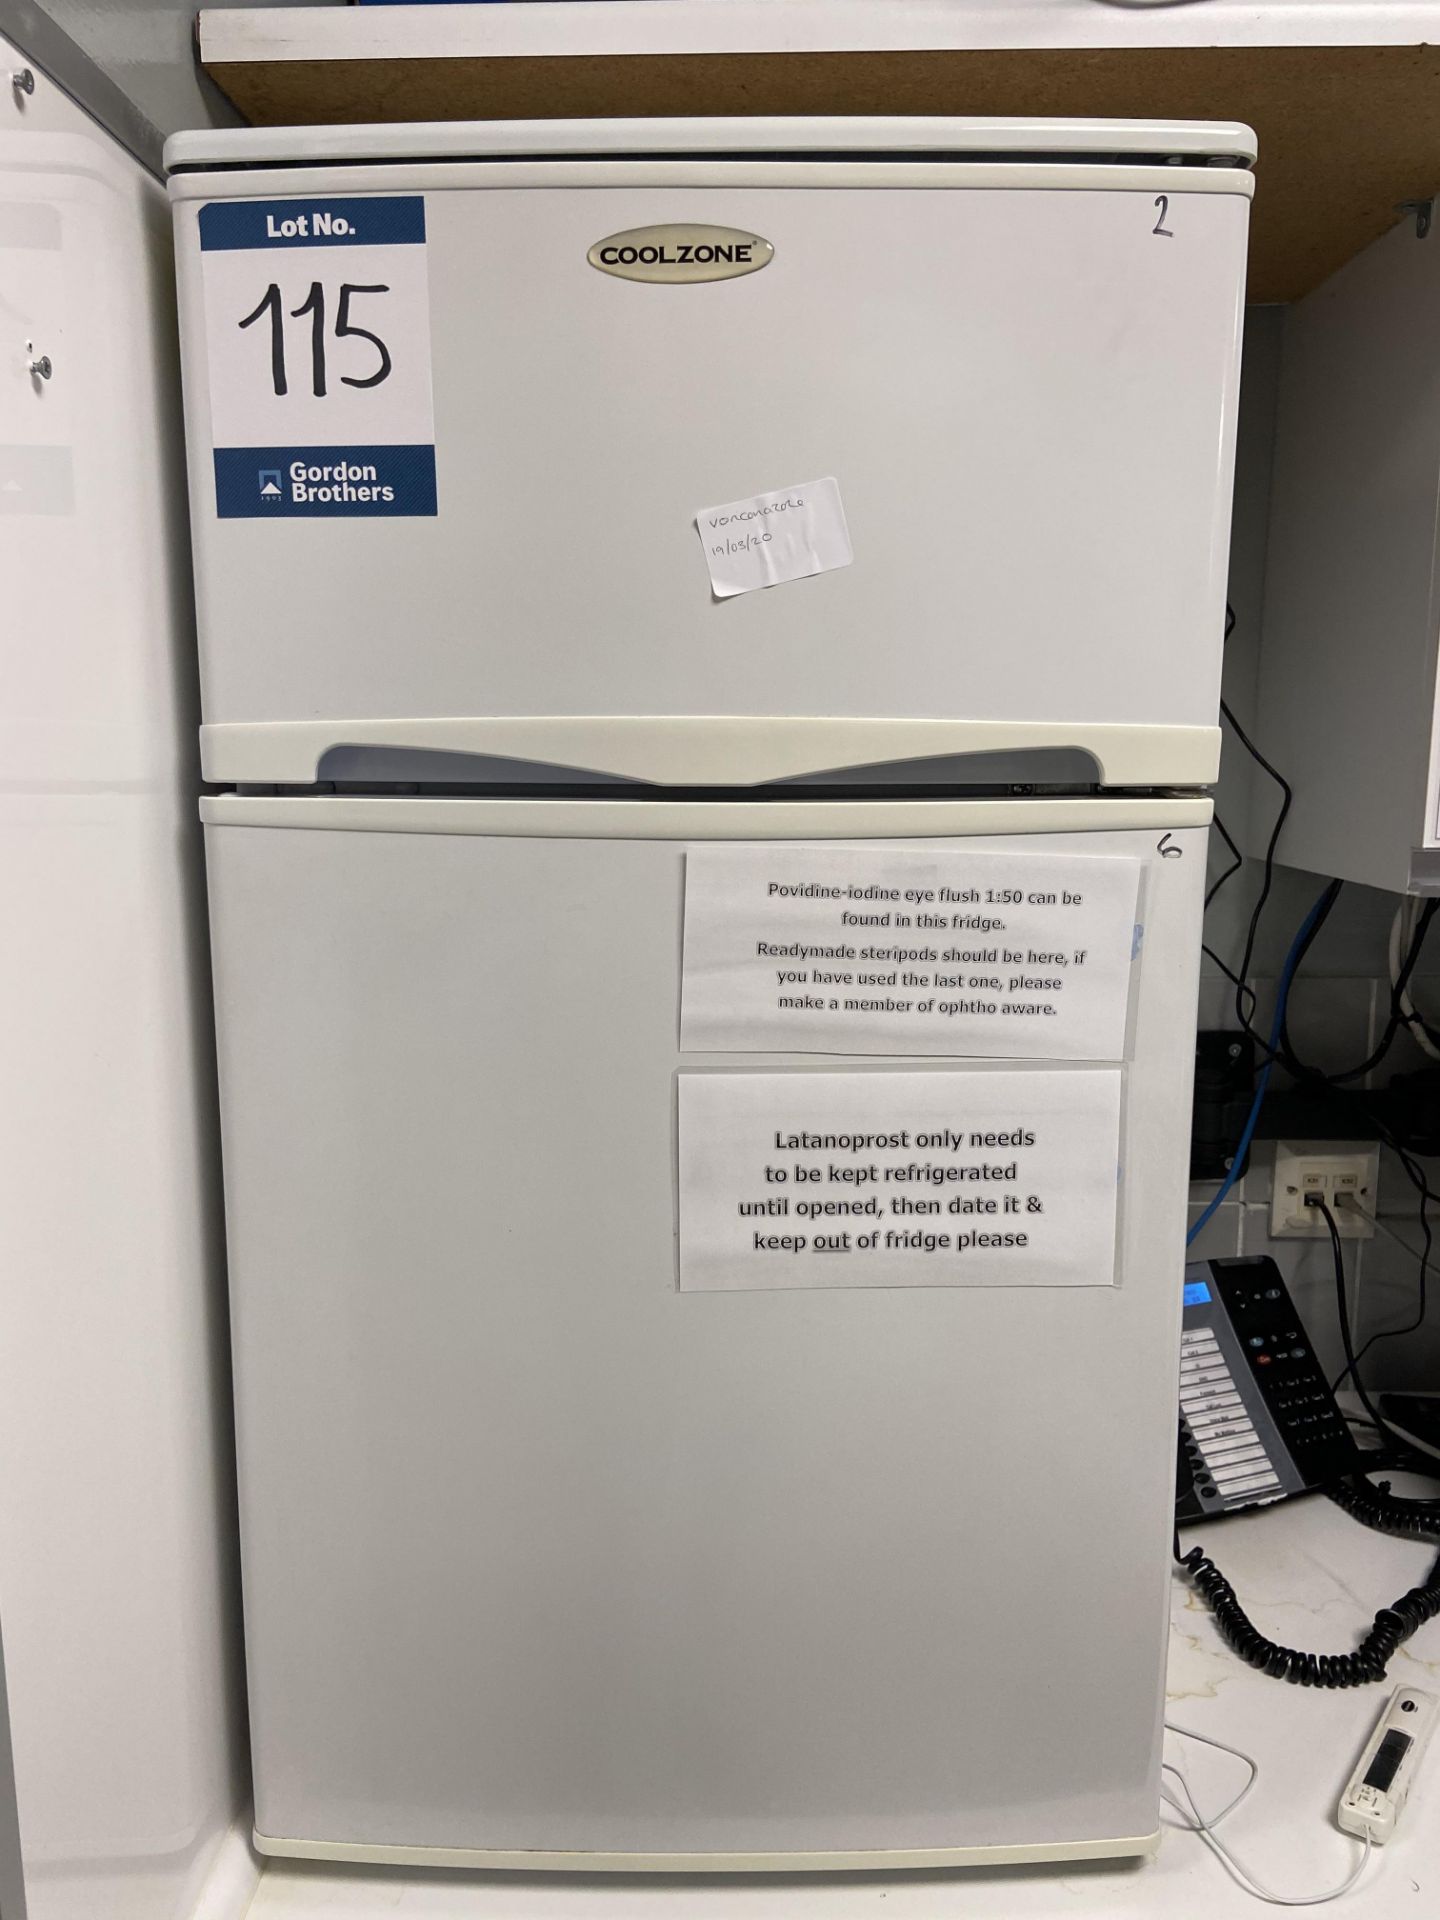 Coolzone (no model) fridge/freezer 480mm x 850mm x 550mm - in Small Animal Clinic GA area